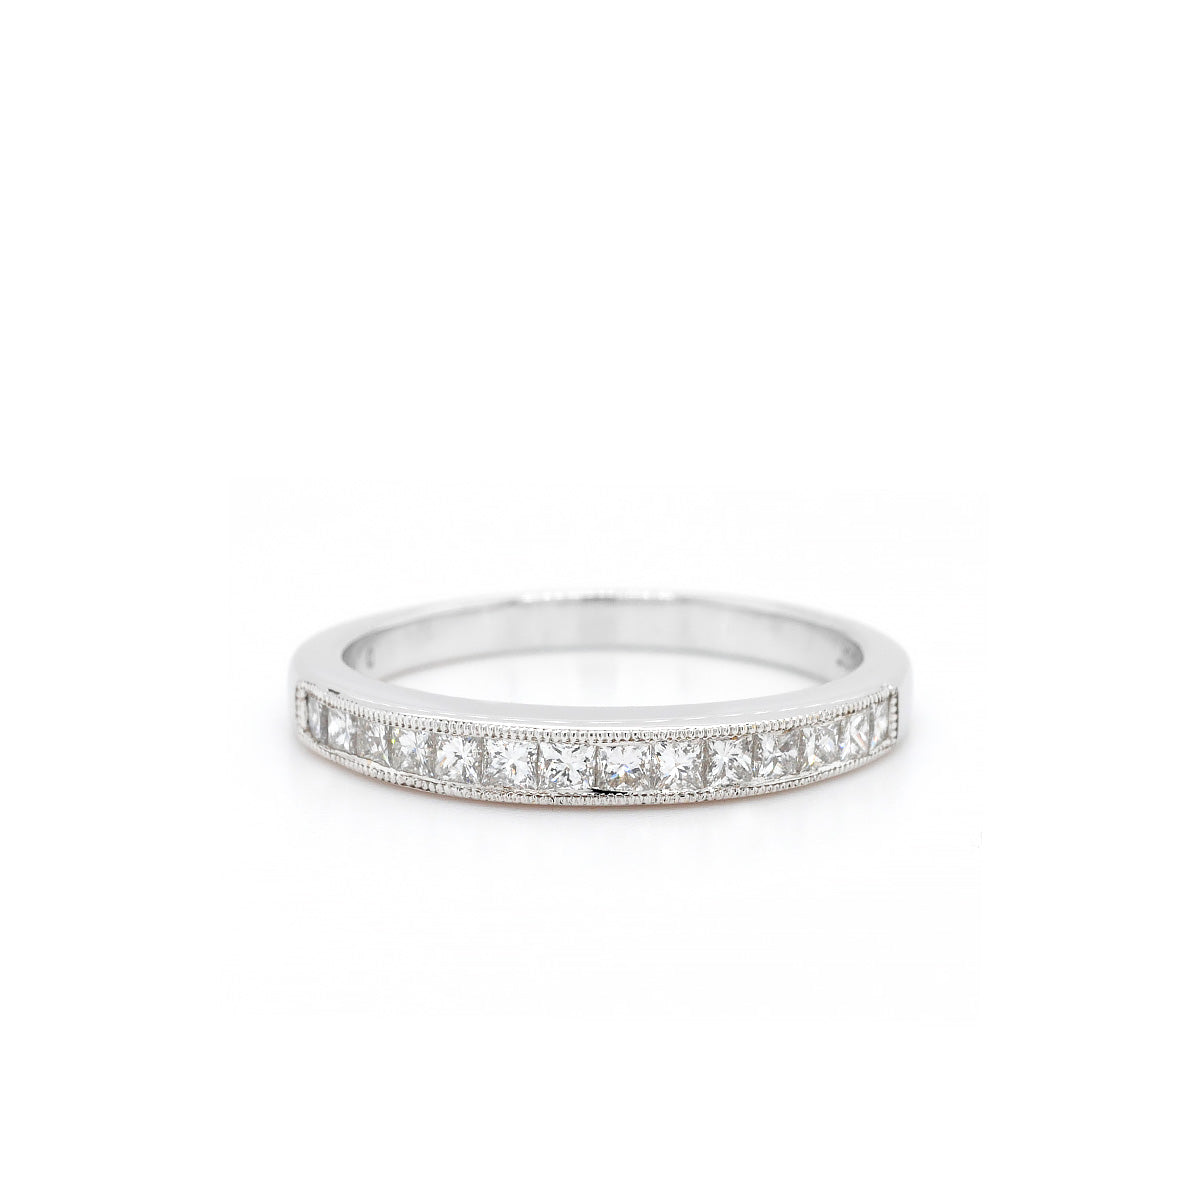 18ct White Gold Princess Cut Millgrain Diamond Ring